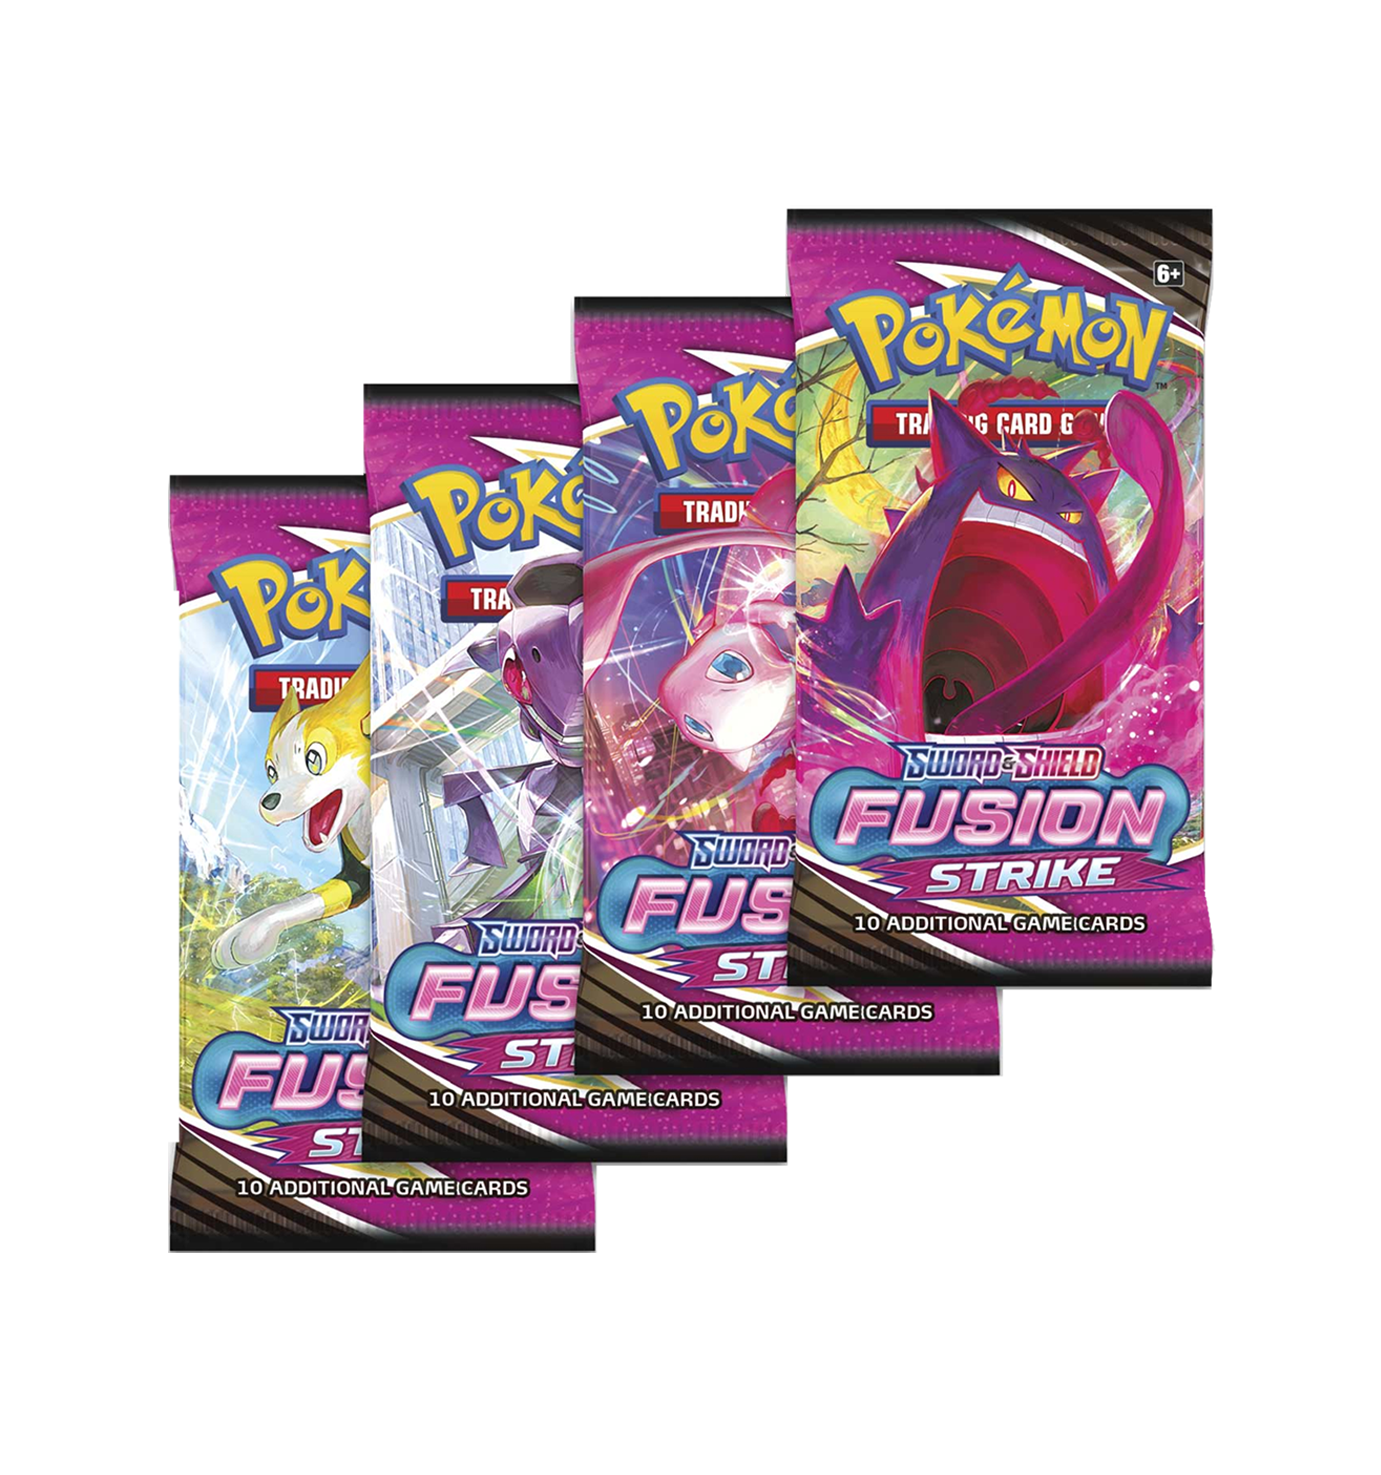 Pokémon TCG Fusion Strike Booster Pack Art set